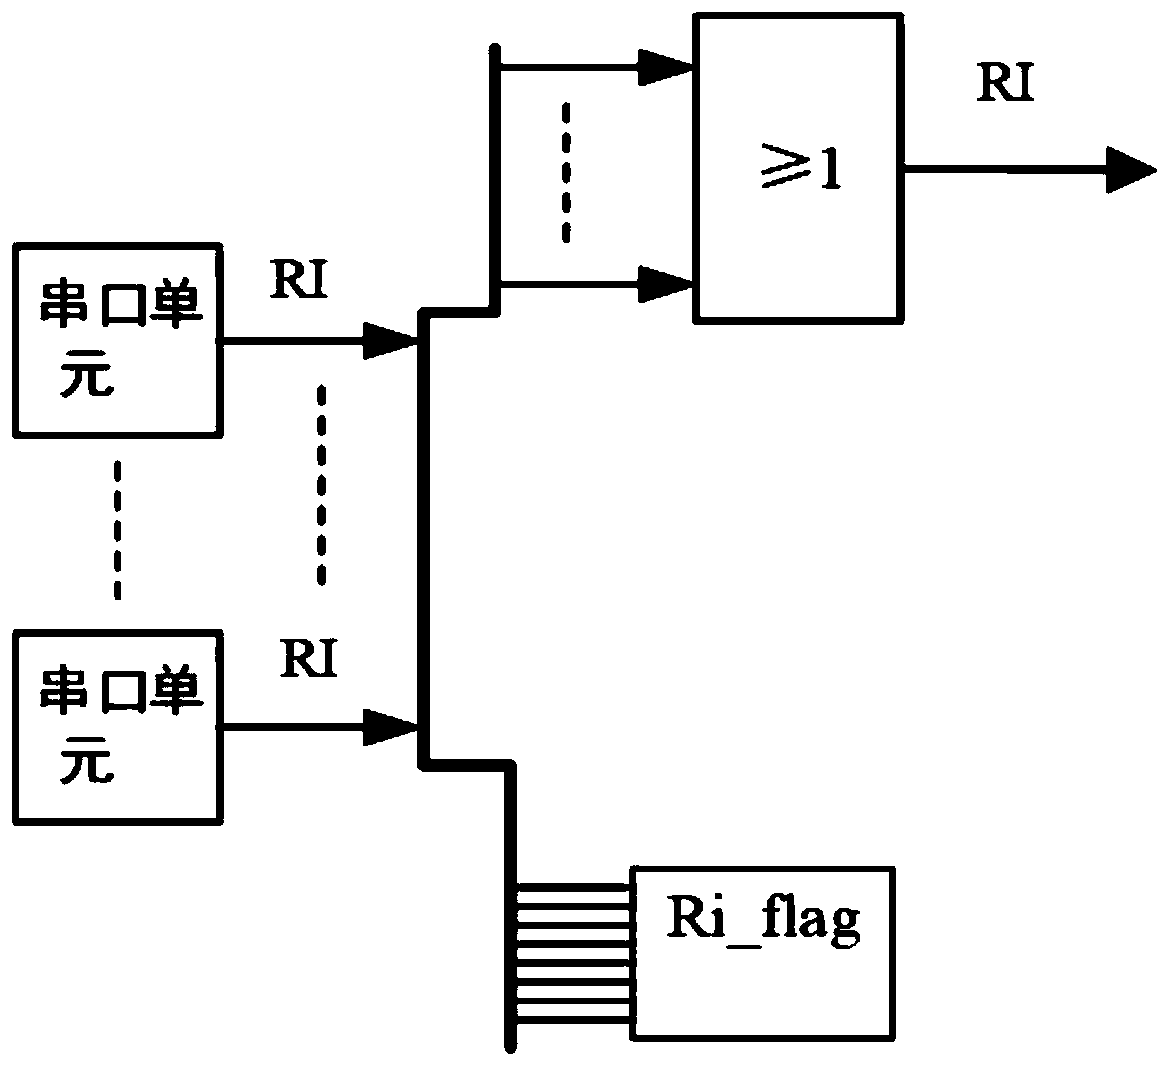 A ship networking multi-channel Beidou communication gateway system